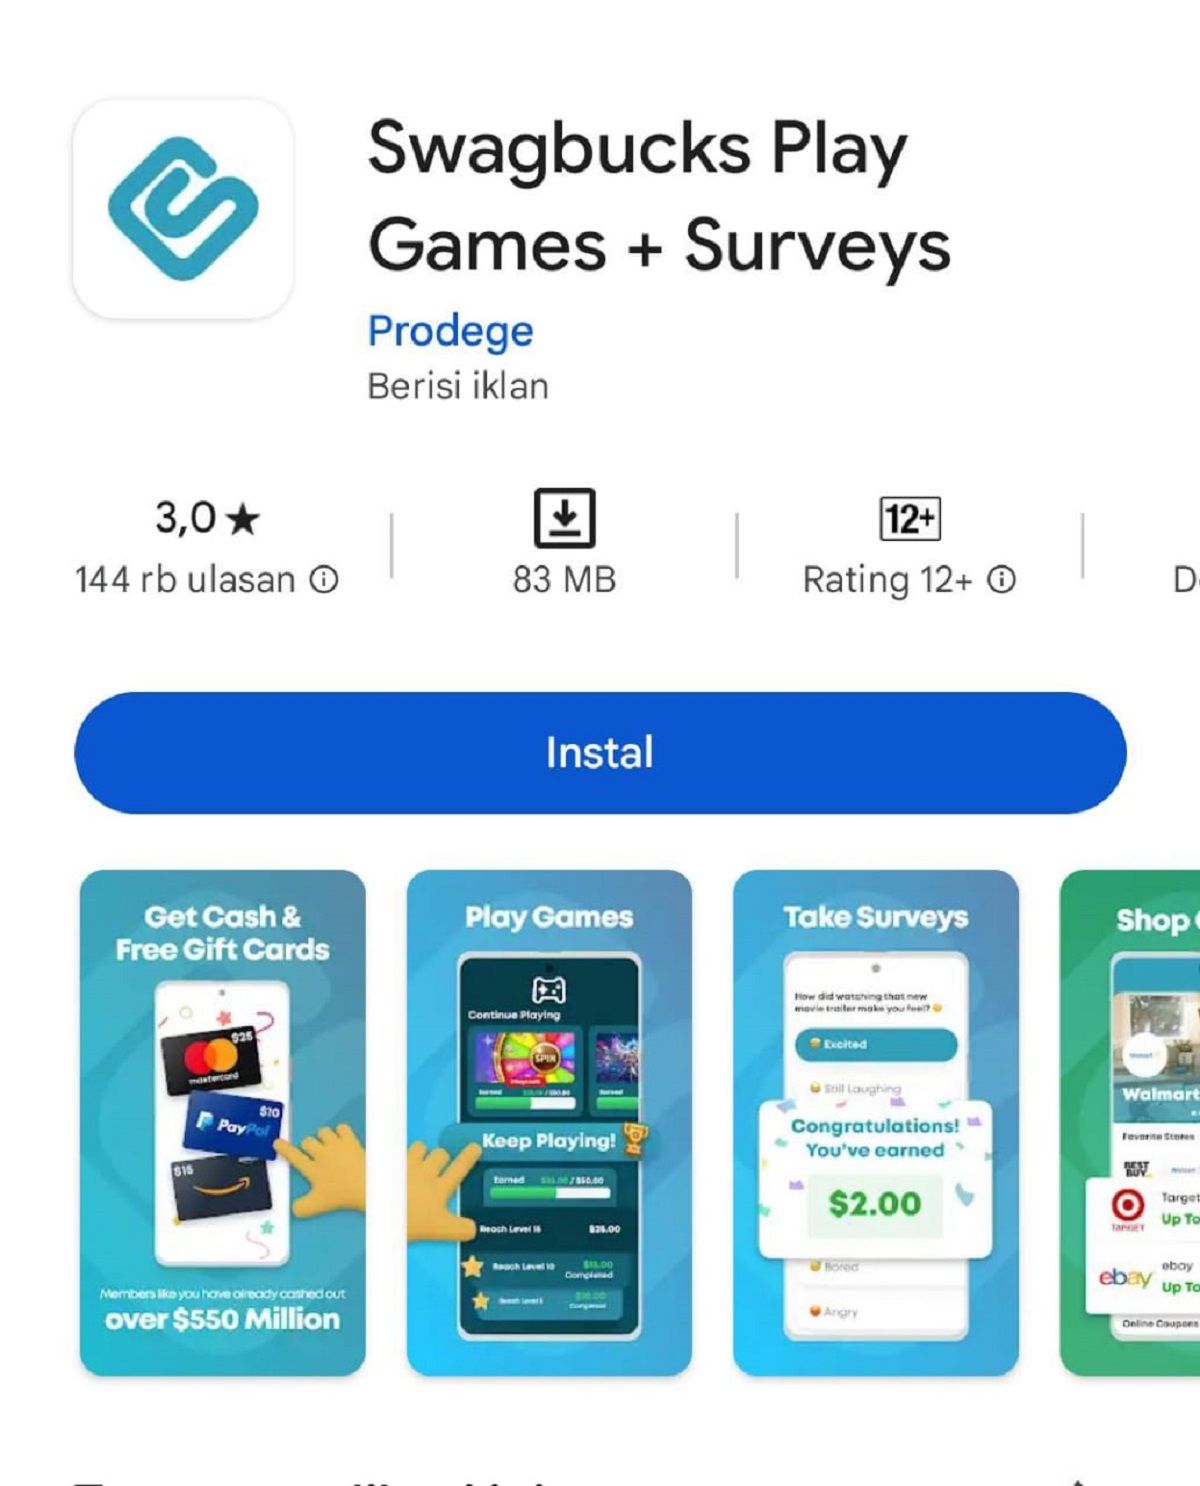 Swagbucks Play Games + Surveys/ Google Play Store